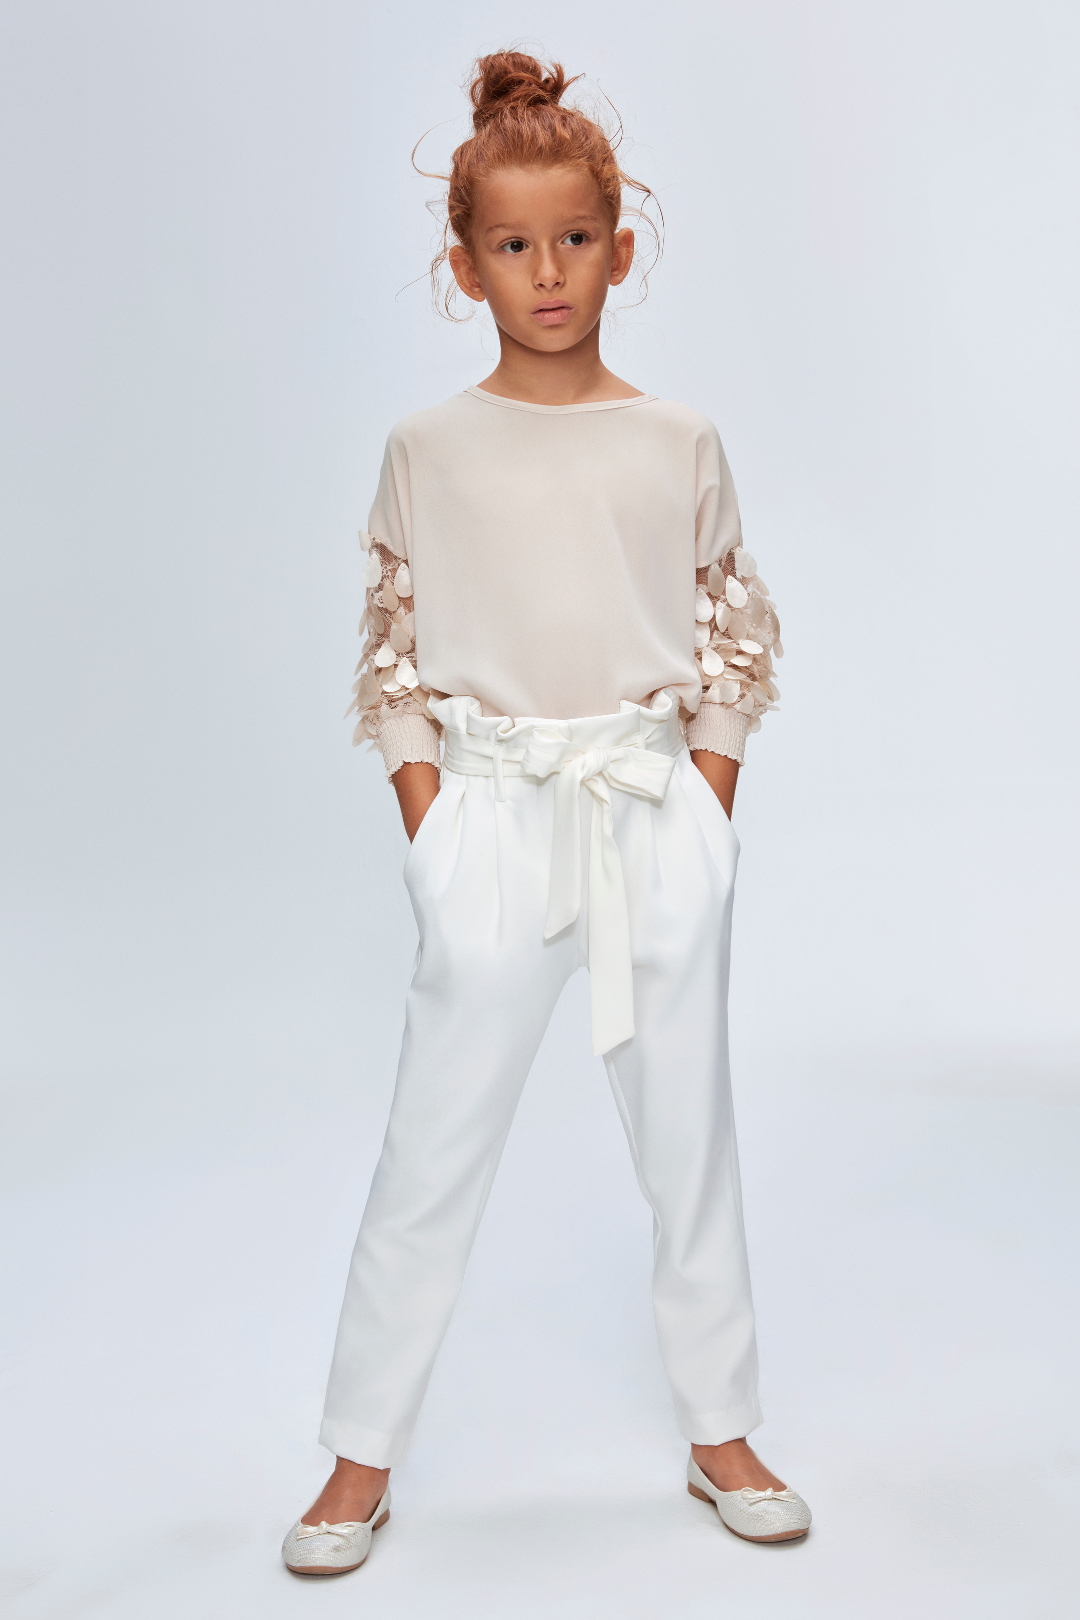 InCity Kids Girls Solid Transparent Floral Sleeve Dress Blouse